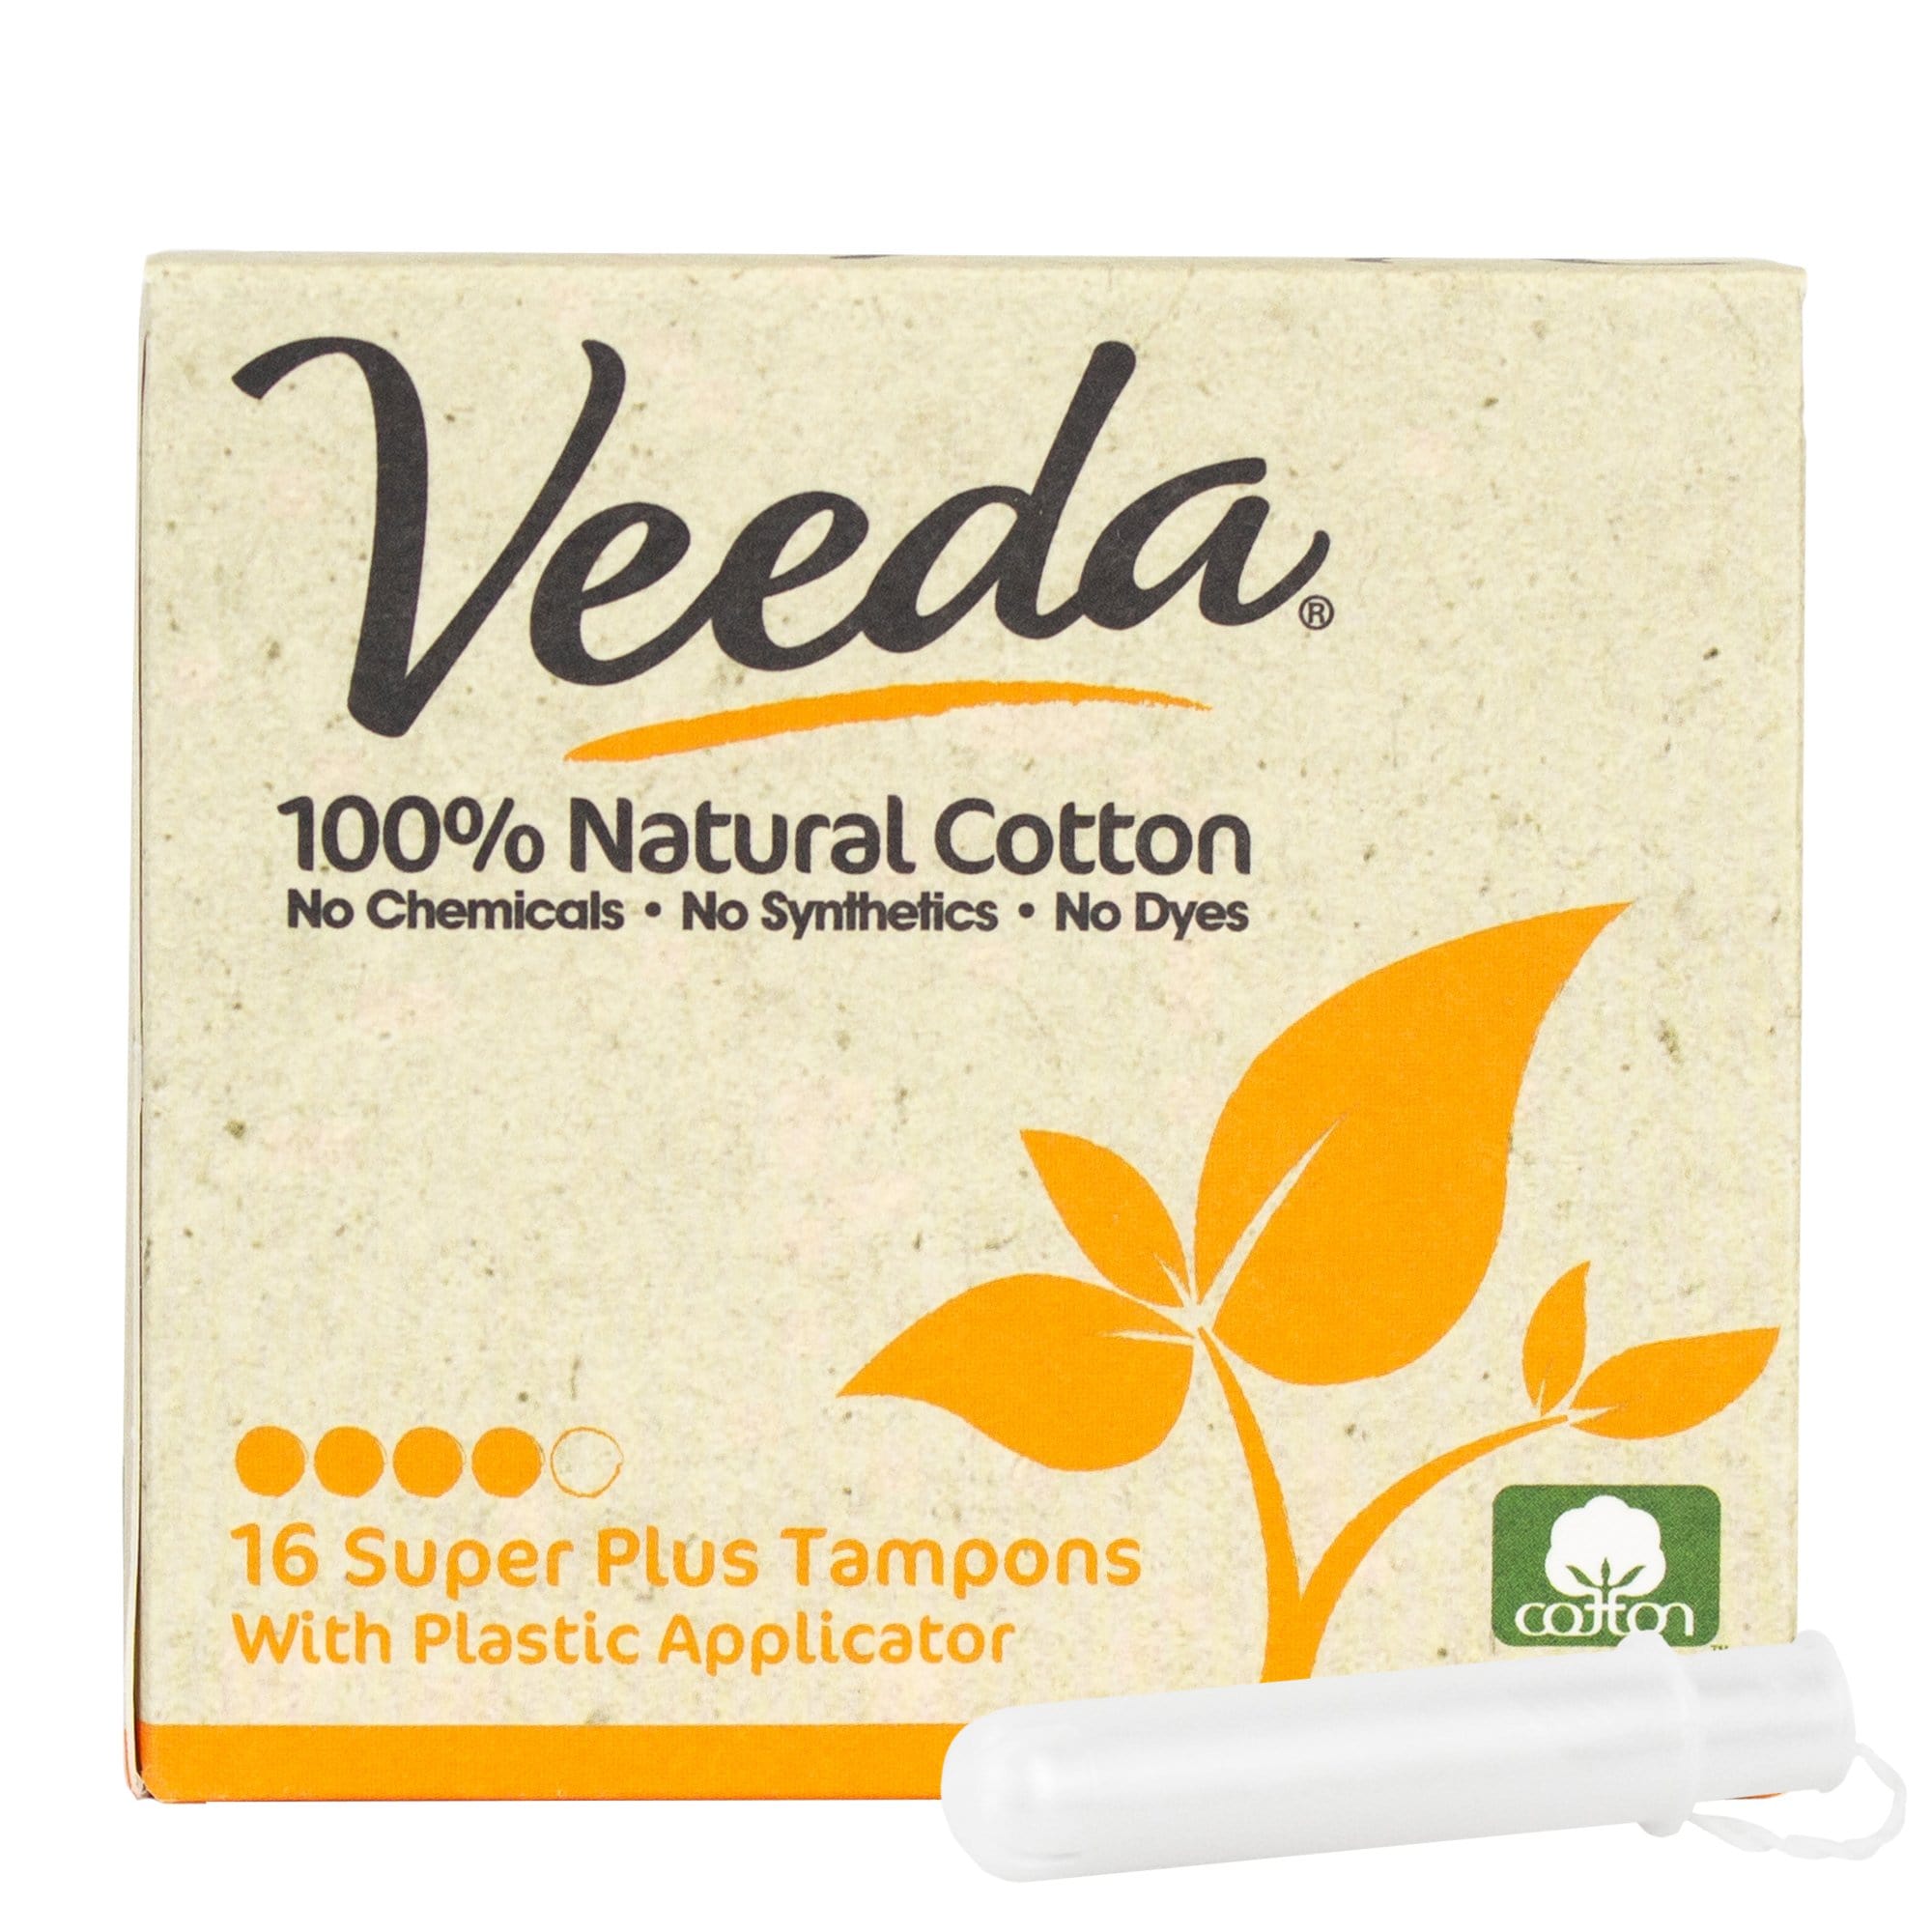 Veeda Natural Cotton Tampons, Lite, Regular, Compact Applicator, 1